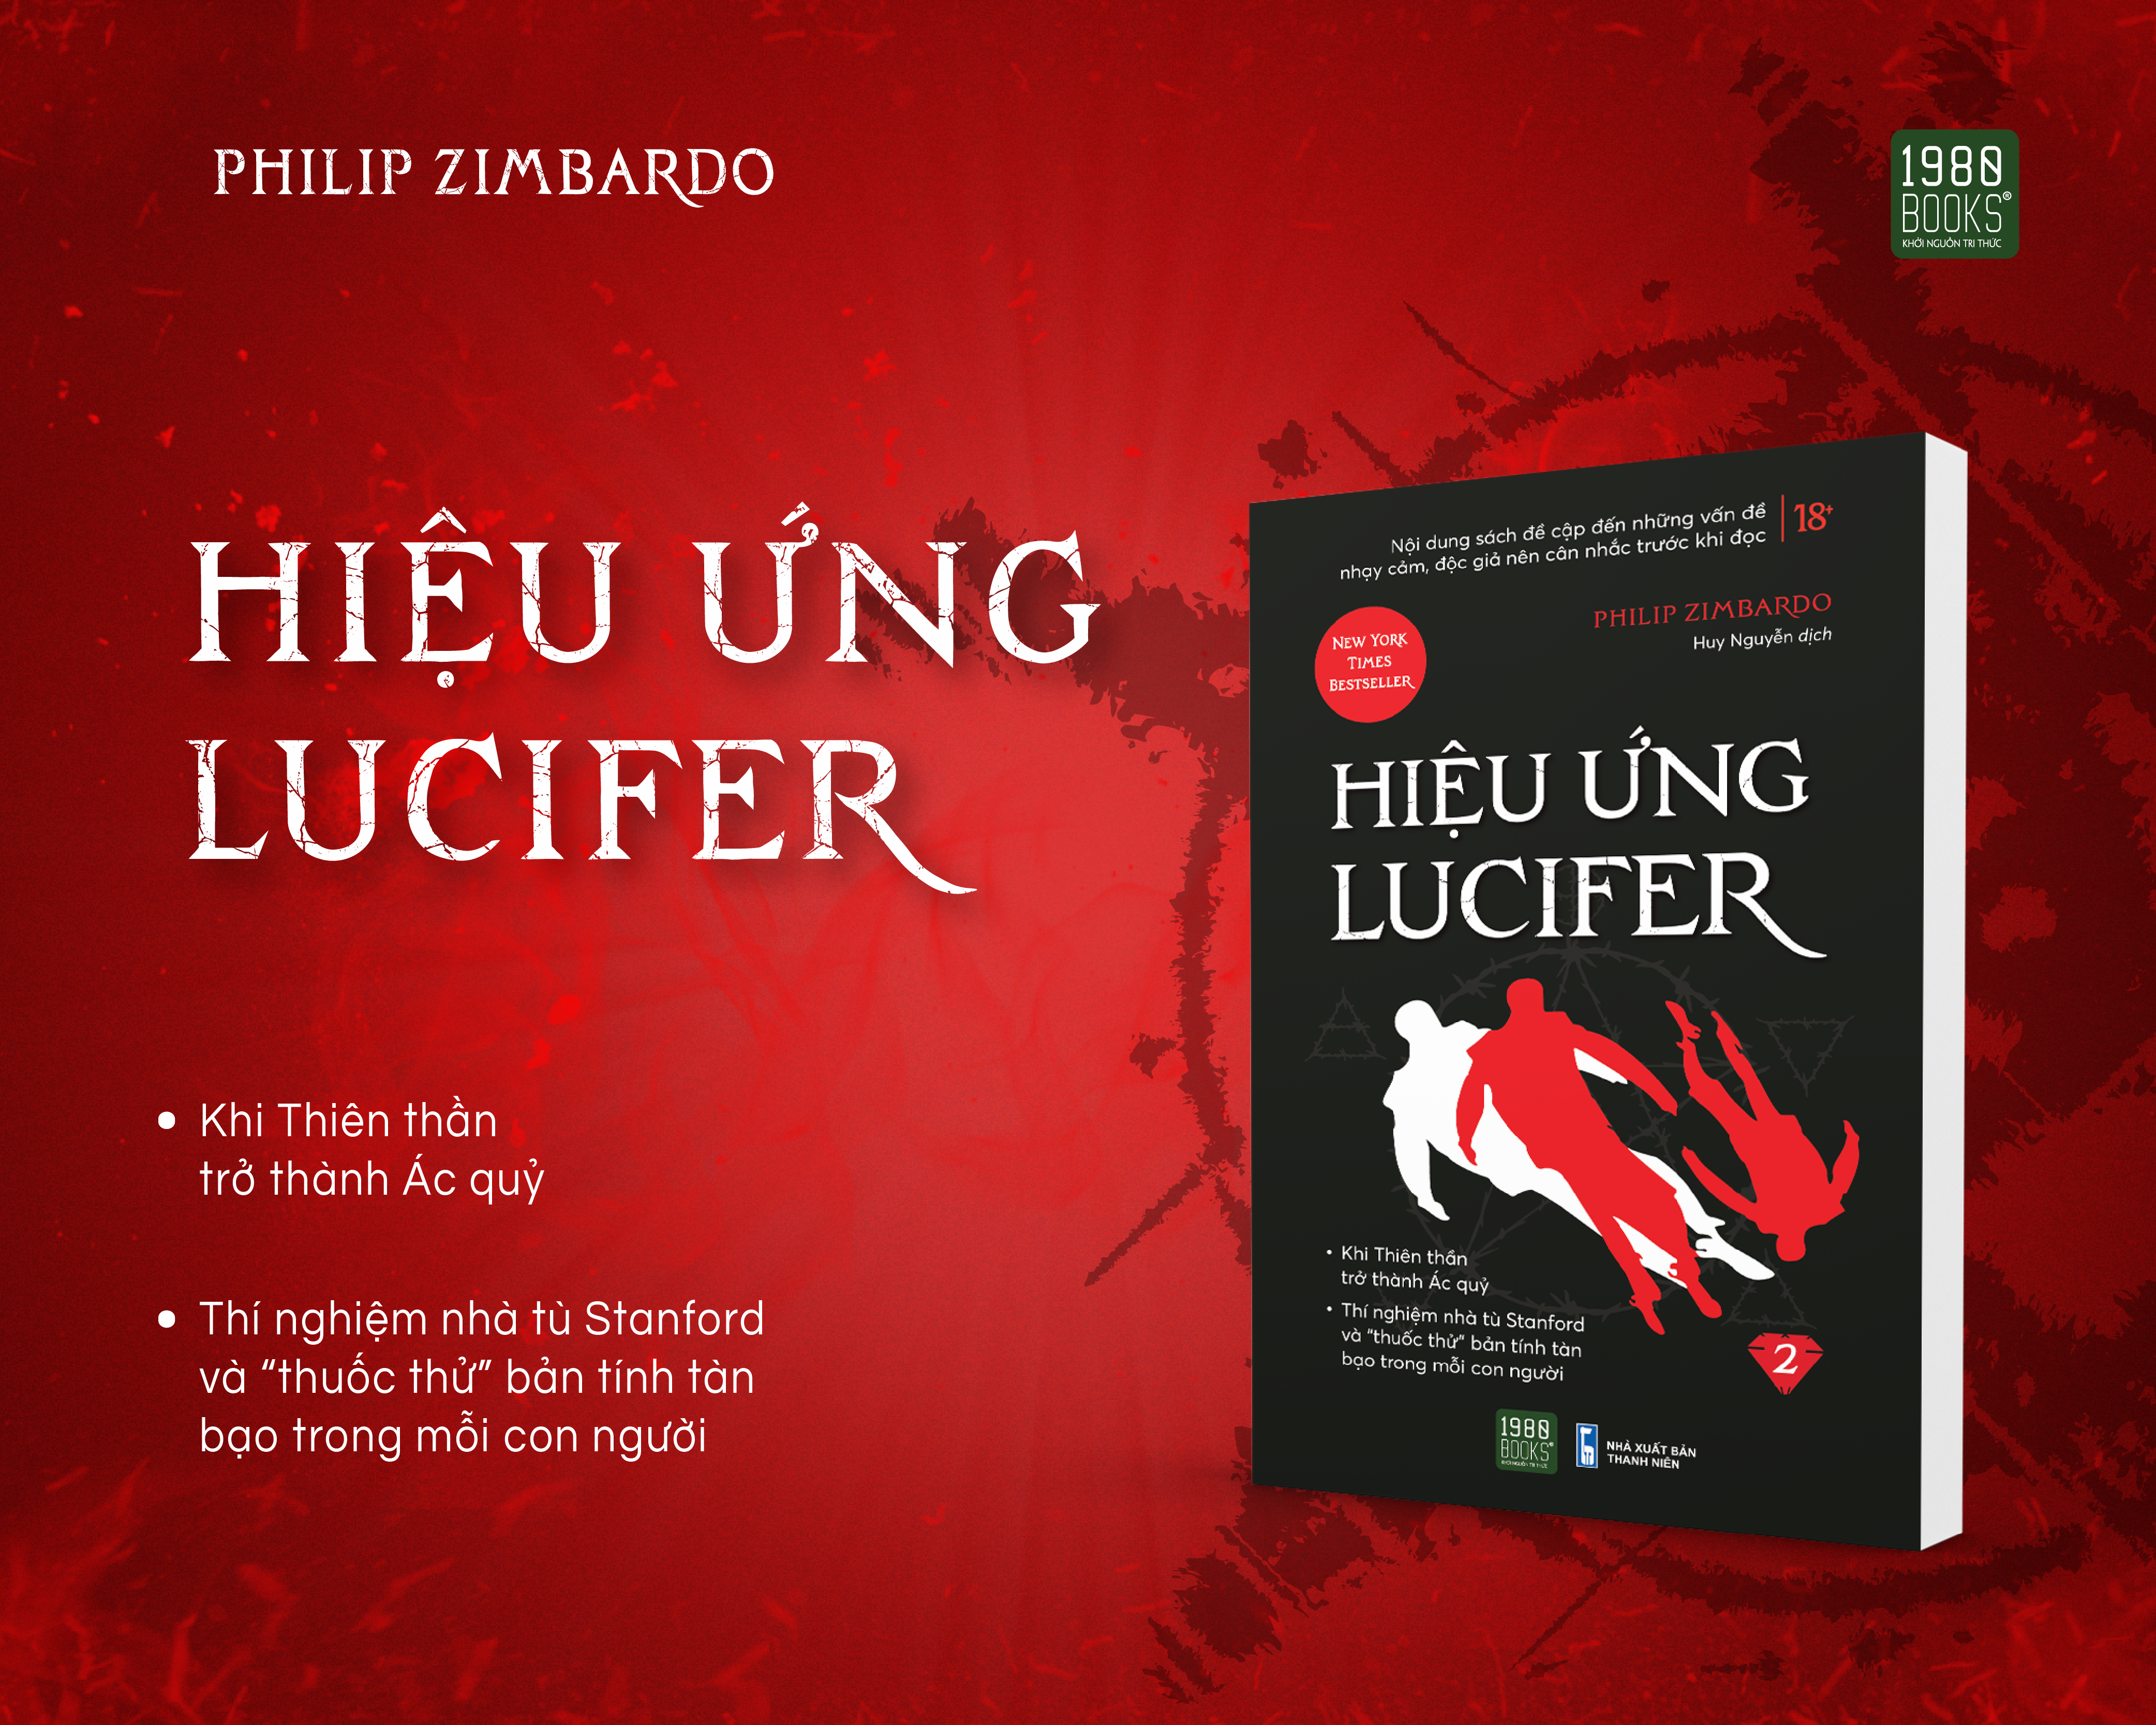 Hiệu ứng Lucifer (Tập 2) - Philip Zimbardo (1980BOOKS HCM)